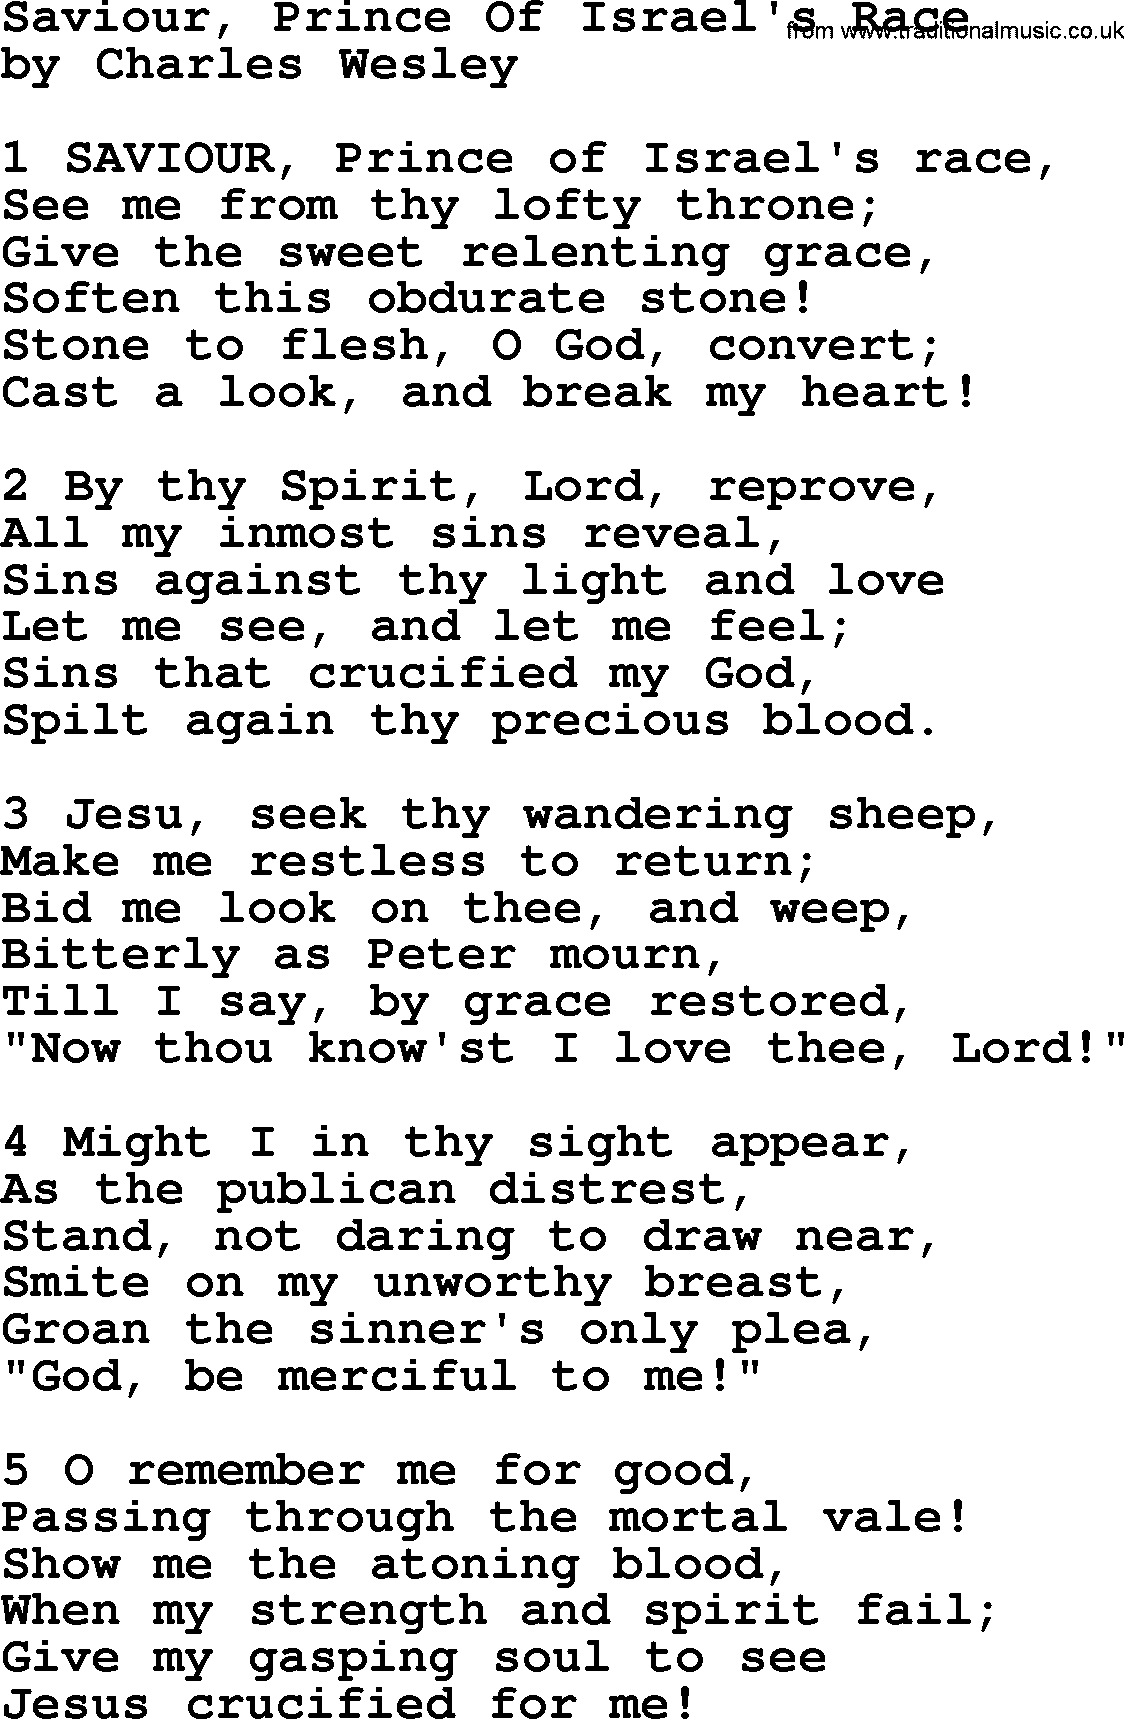 Charles Wesley hymn: Saviour, Prince Of Israel's Race, lyrics